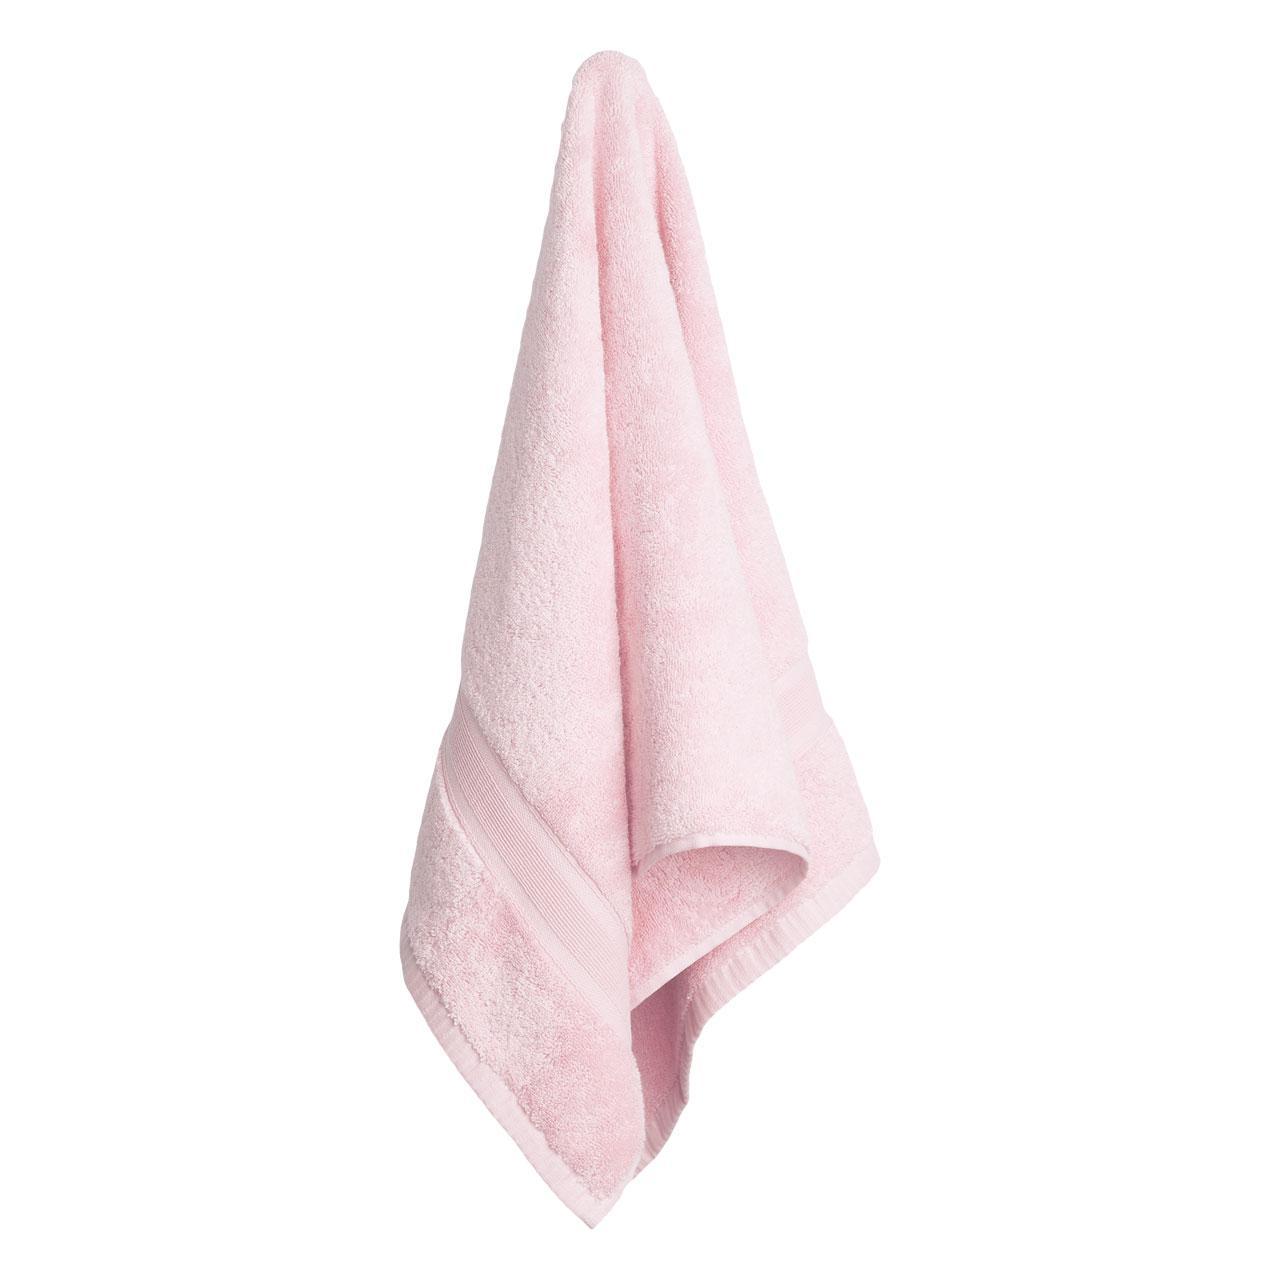 M&S Super Soft Antibacterial Cotton, Hand Towel, Light Pink